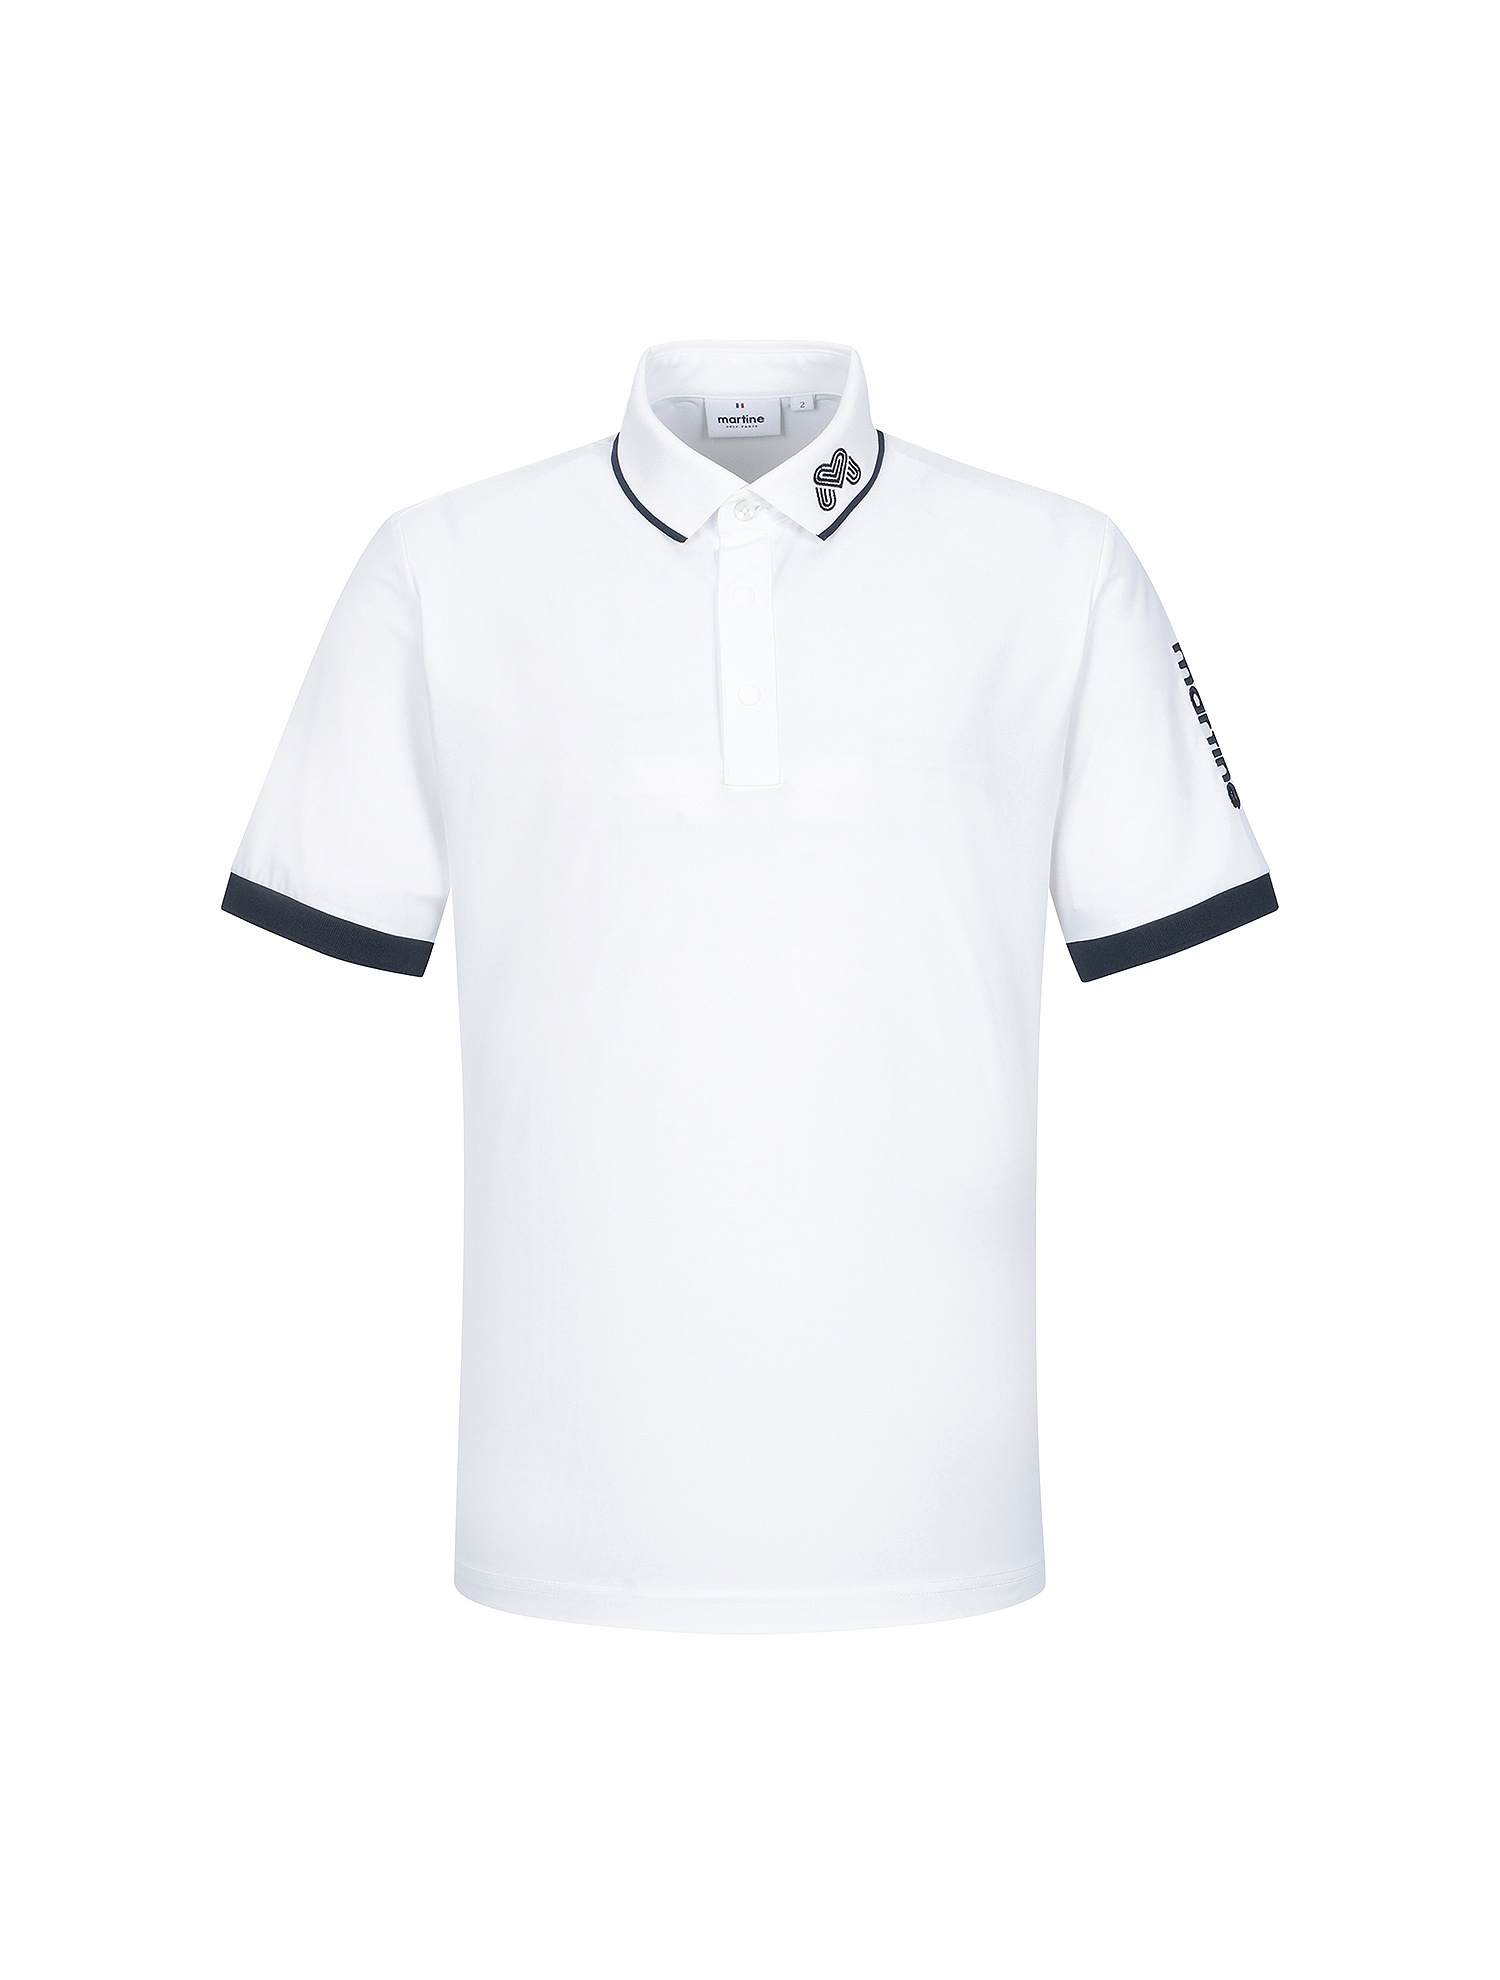 Basic Fit Polo Shirts_White (Men) (QM0EKS20131)